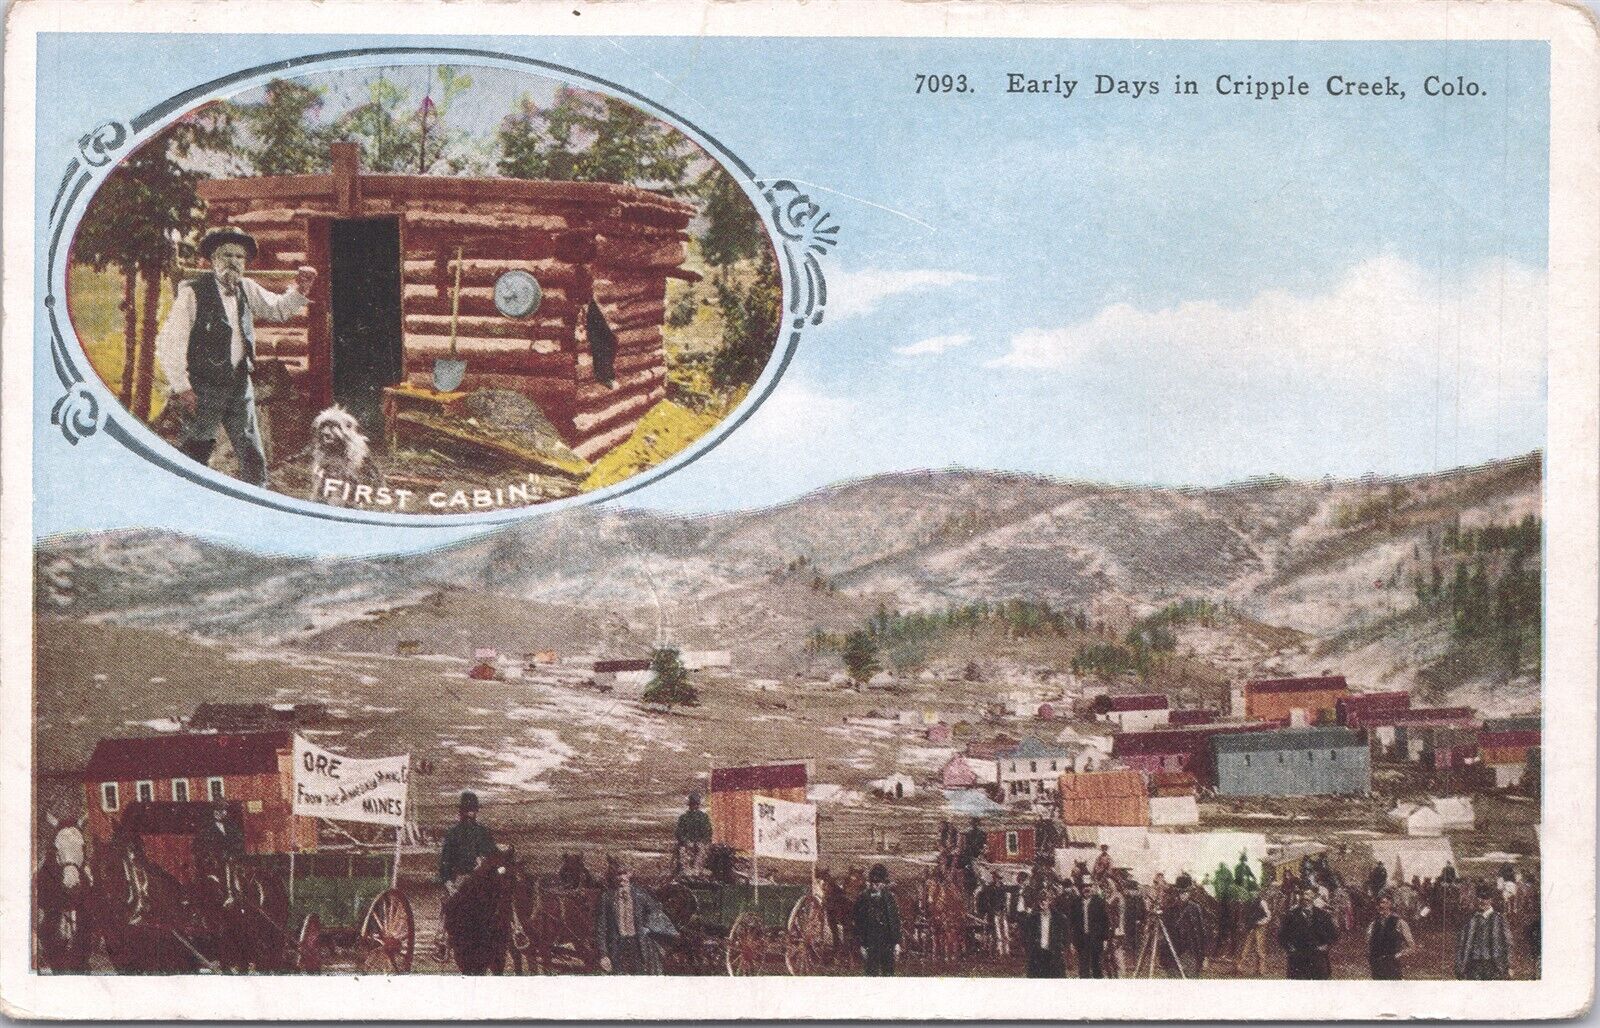 Cripple Creek, Colo., Early Days in Cripple Creek - 